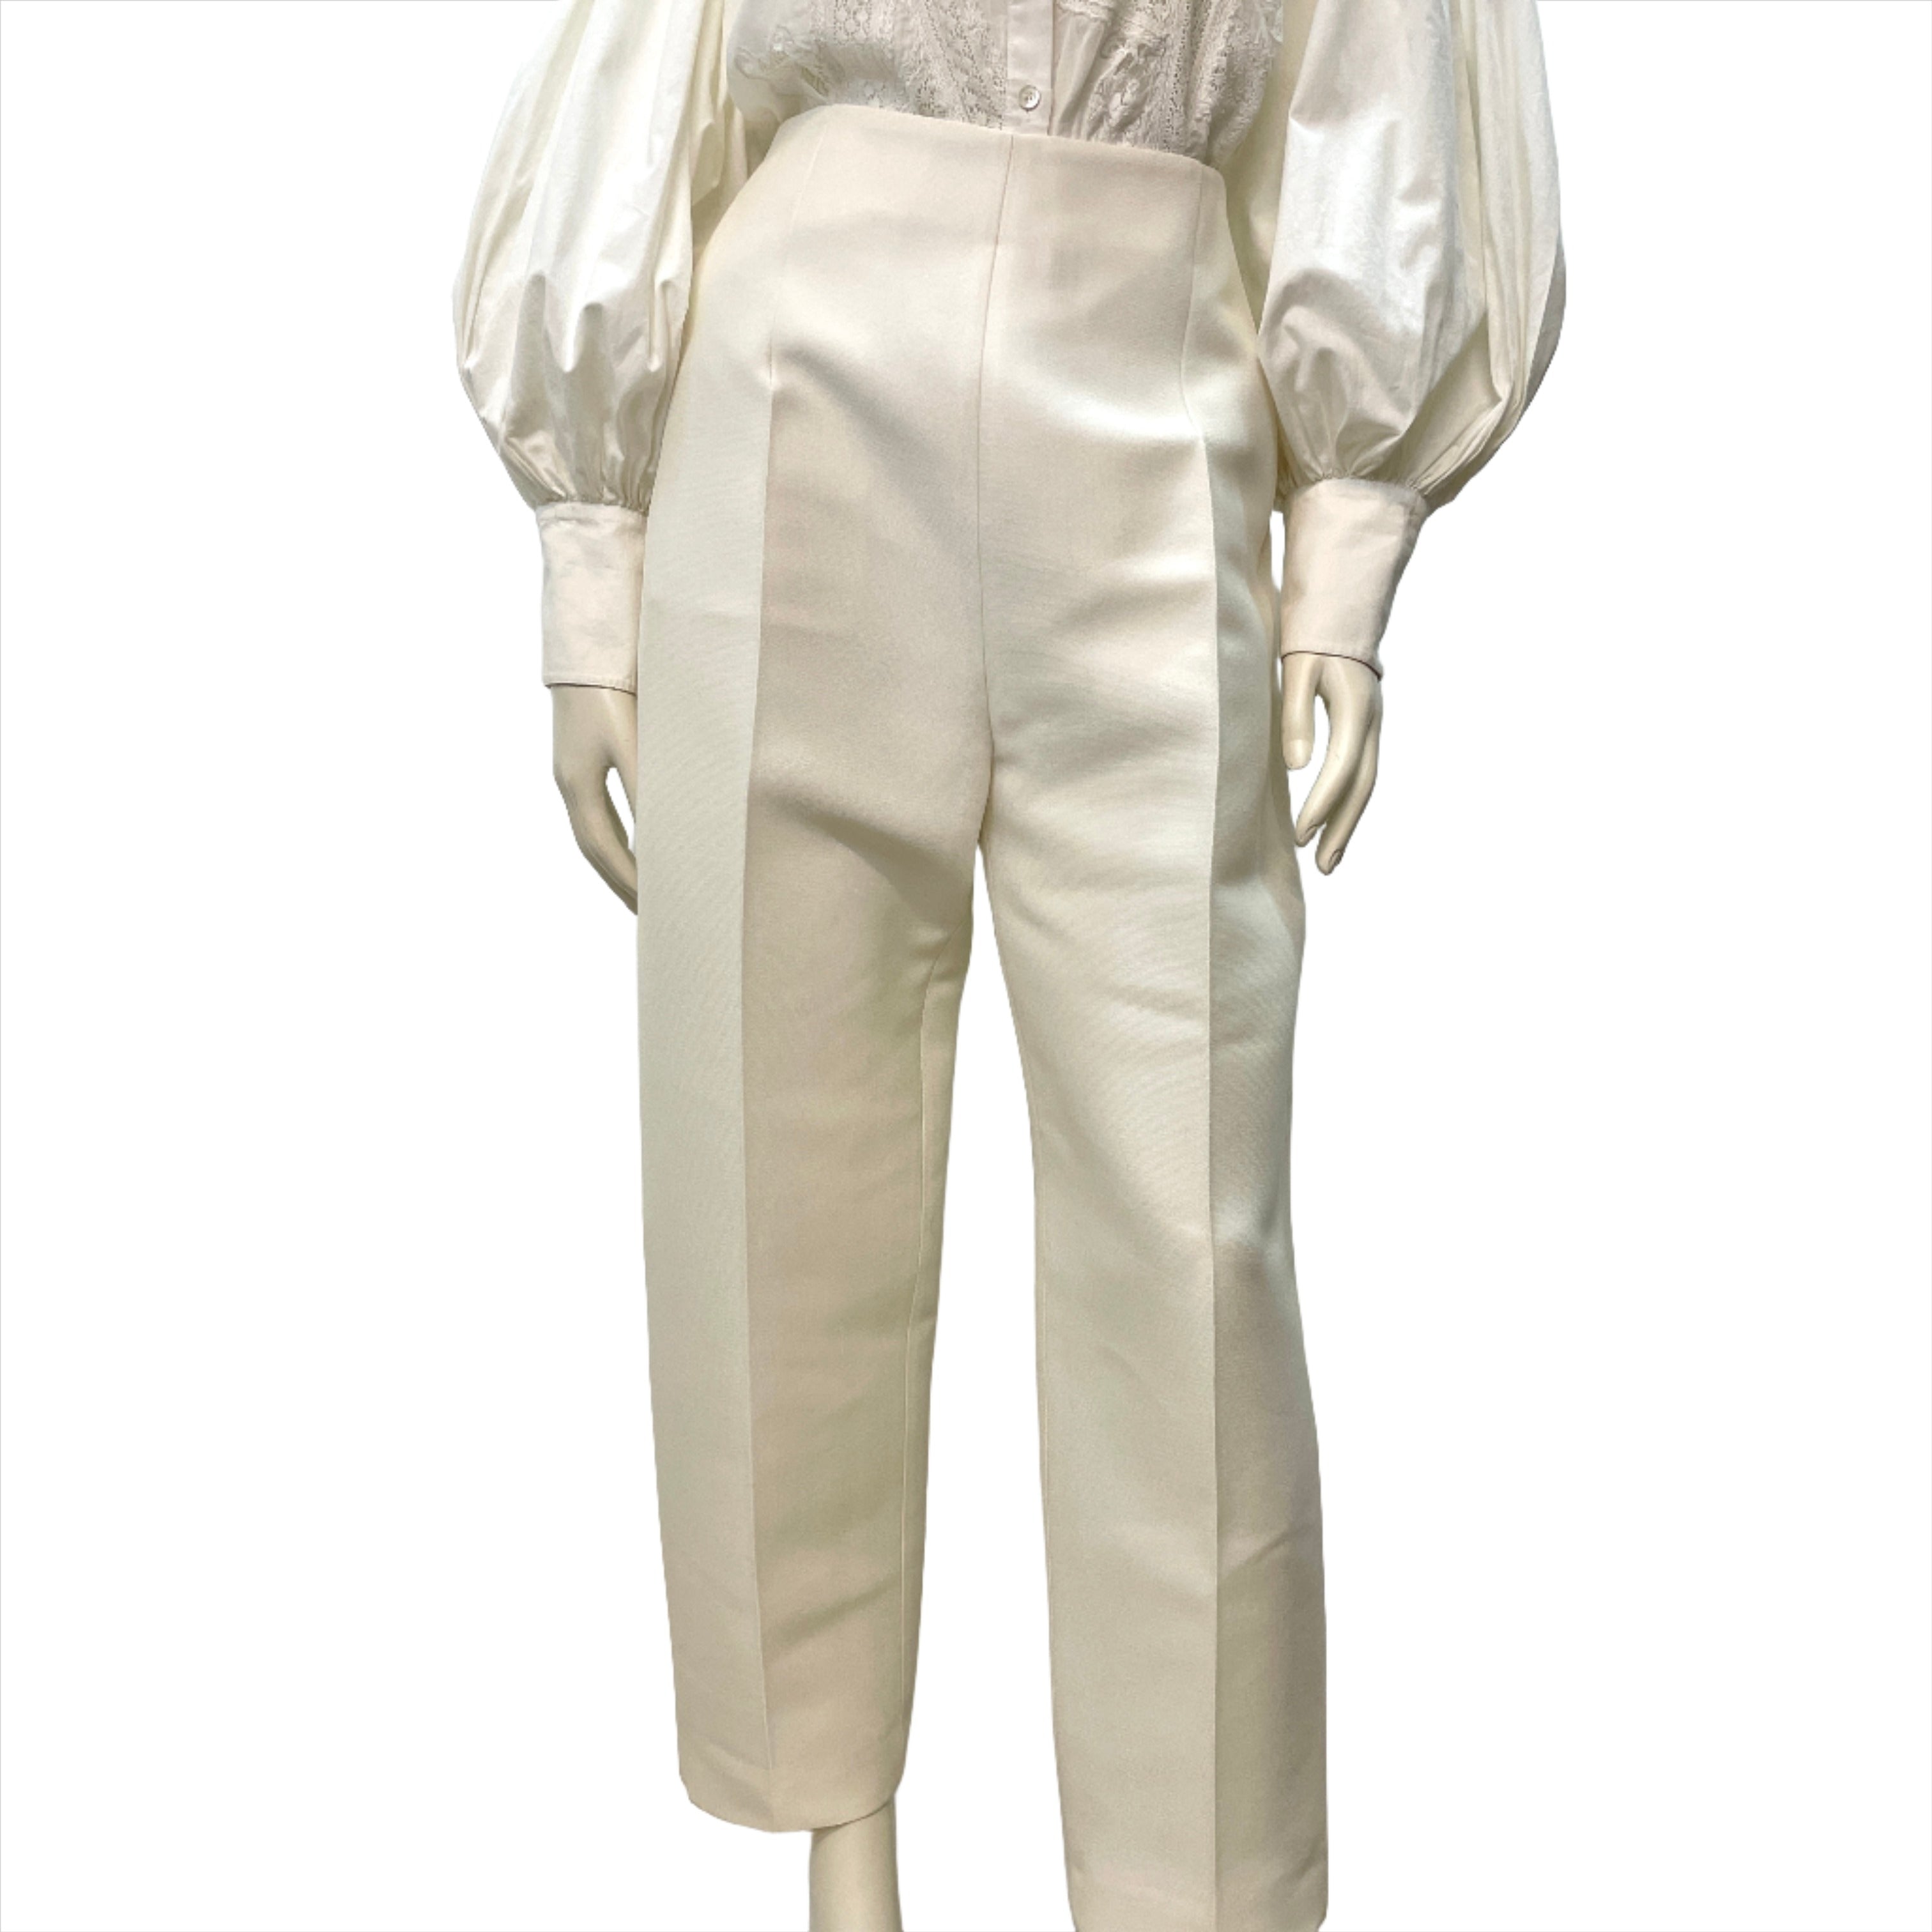 Phoebe Philo Era Deadstock Celine Vintage Designer Trousers Made in Italy  Size 29